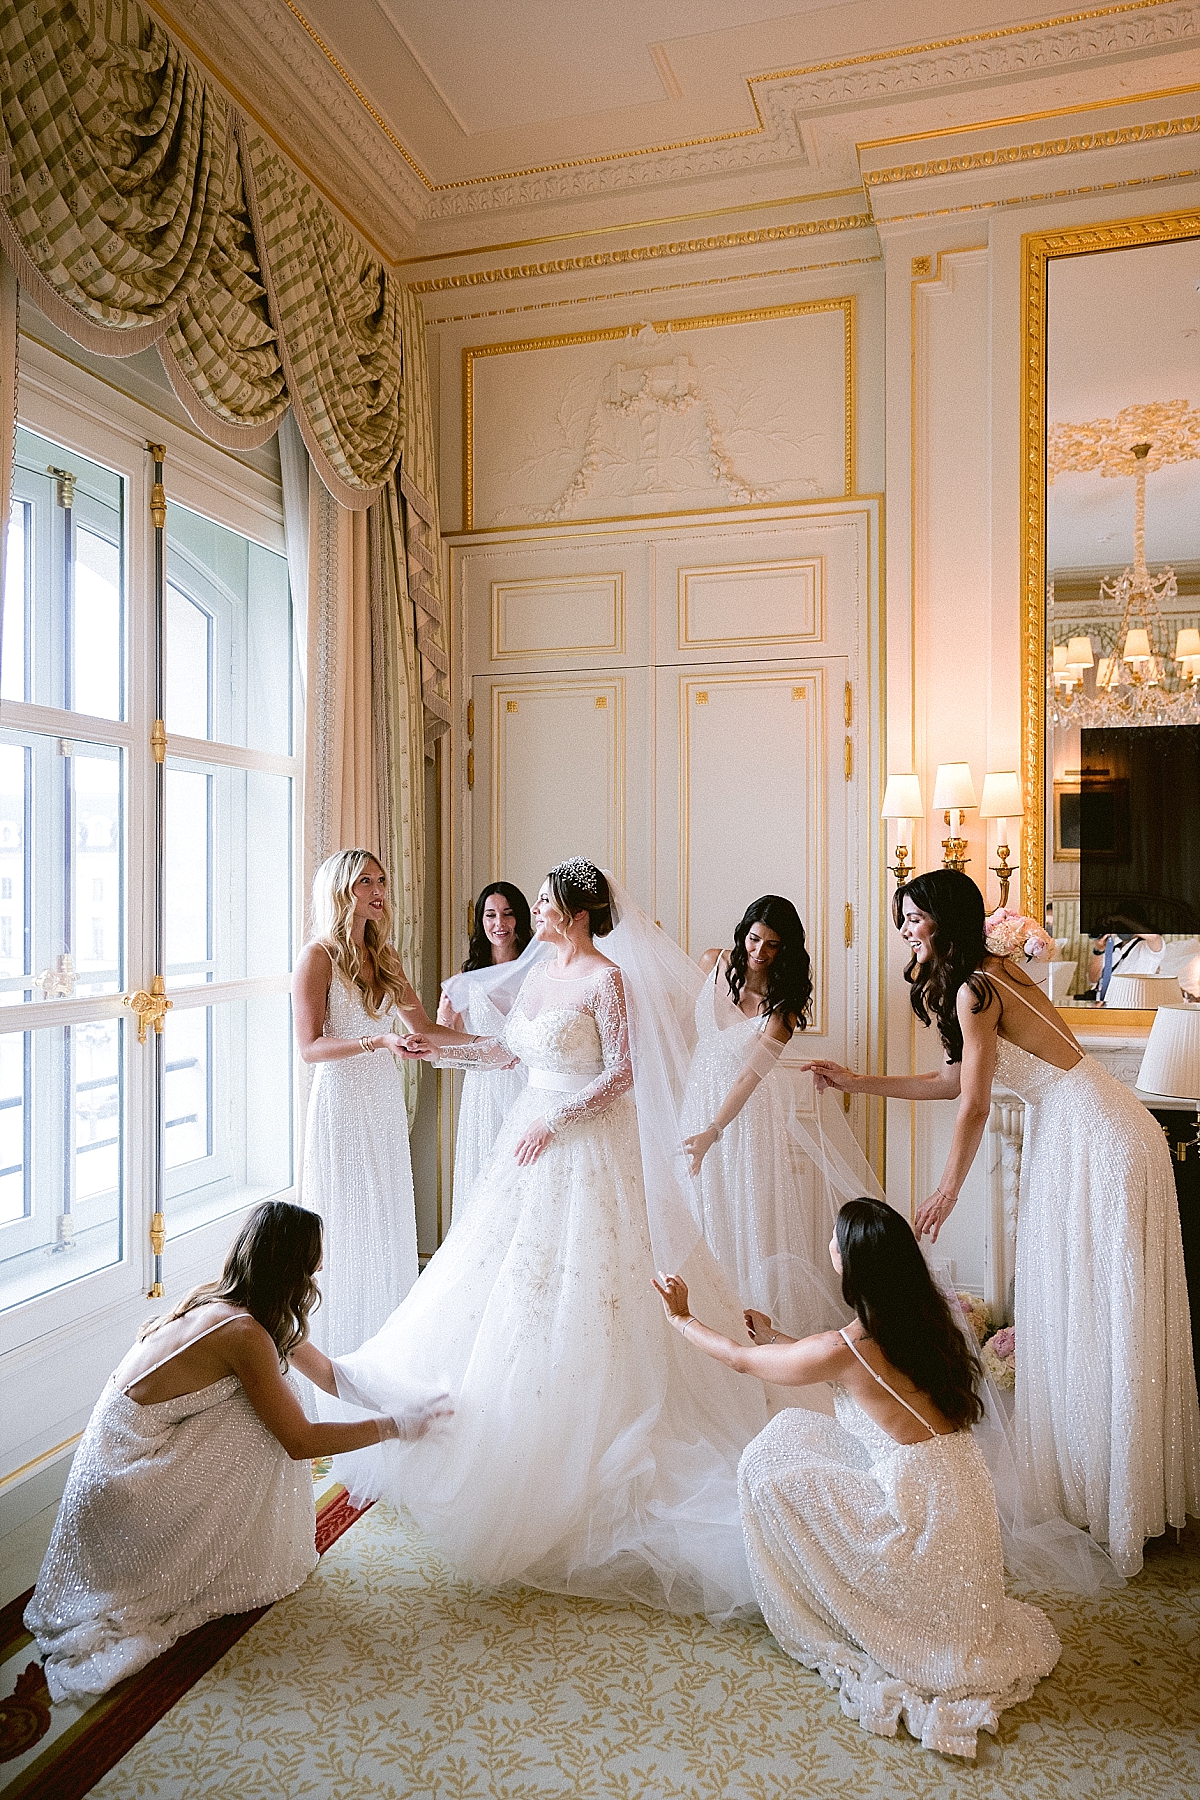 Unforgettable Wedding at The Ritz Paris:Your Dream Destination